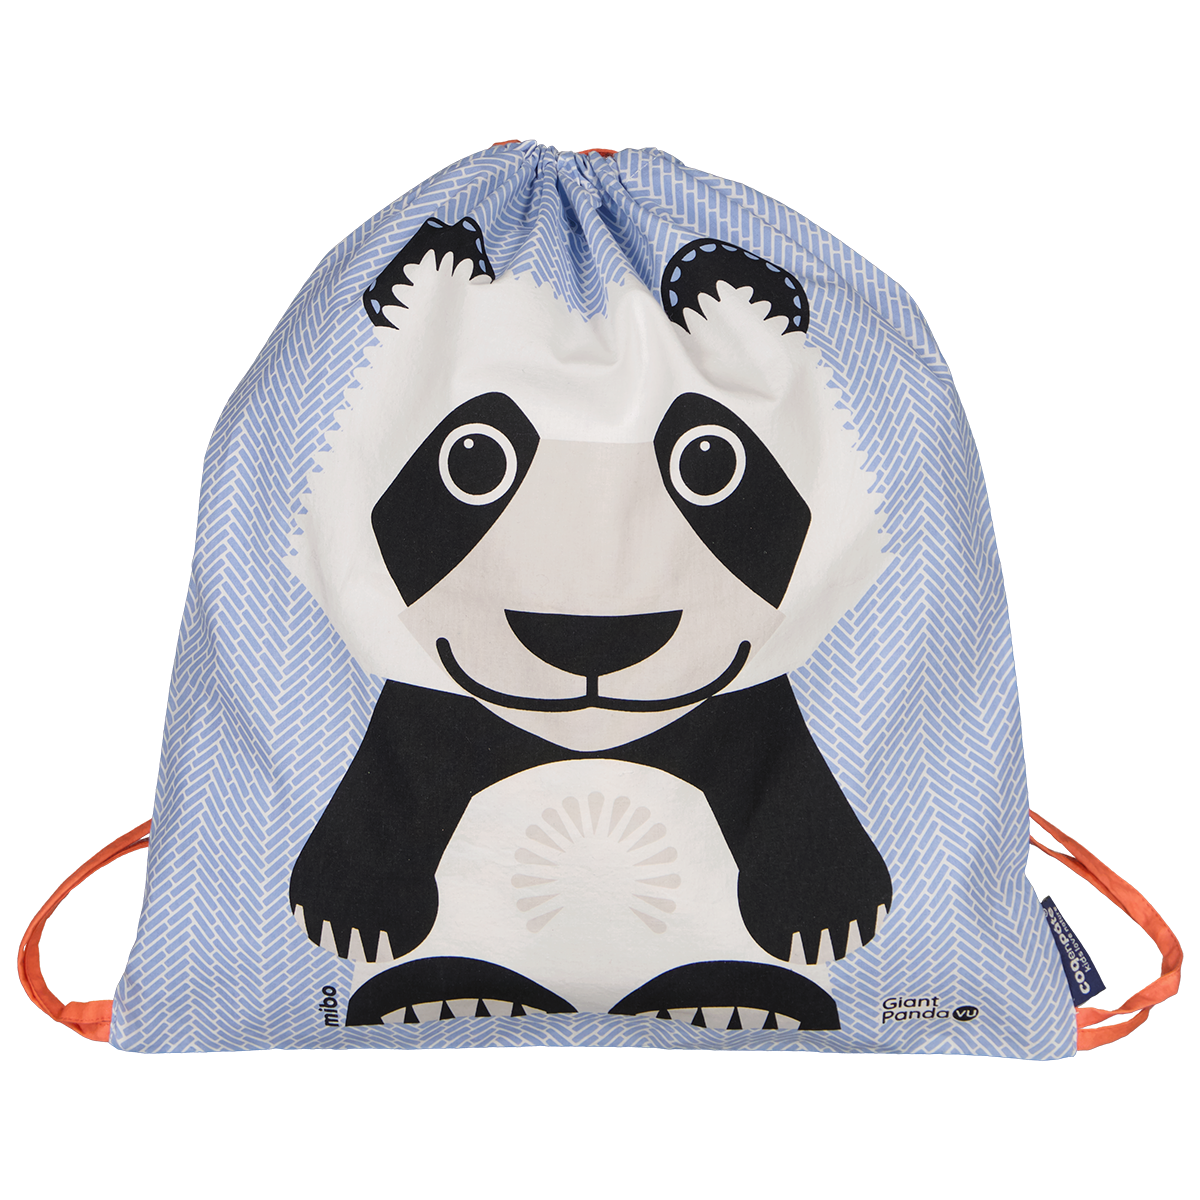 Activity Bag Backpack - Panda